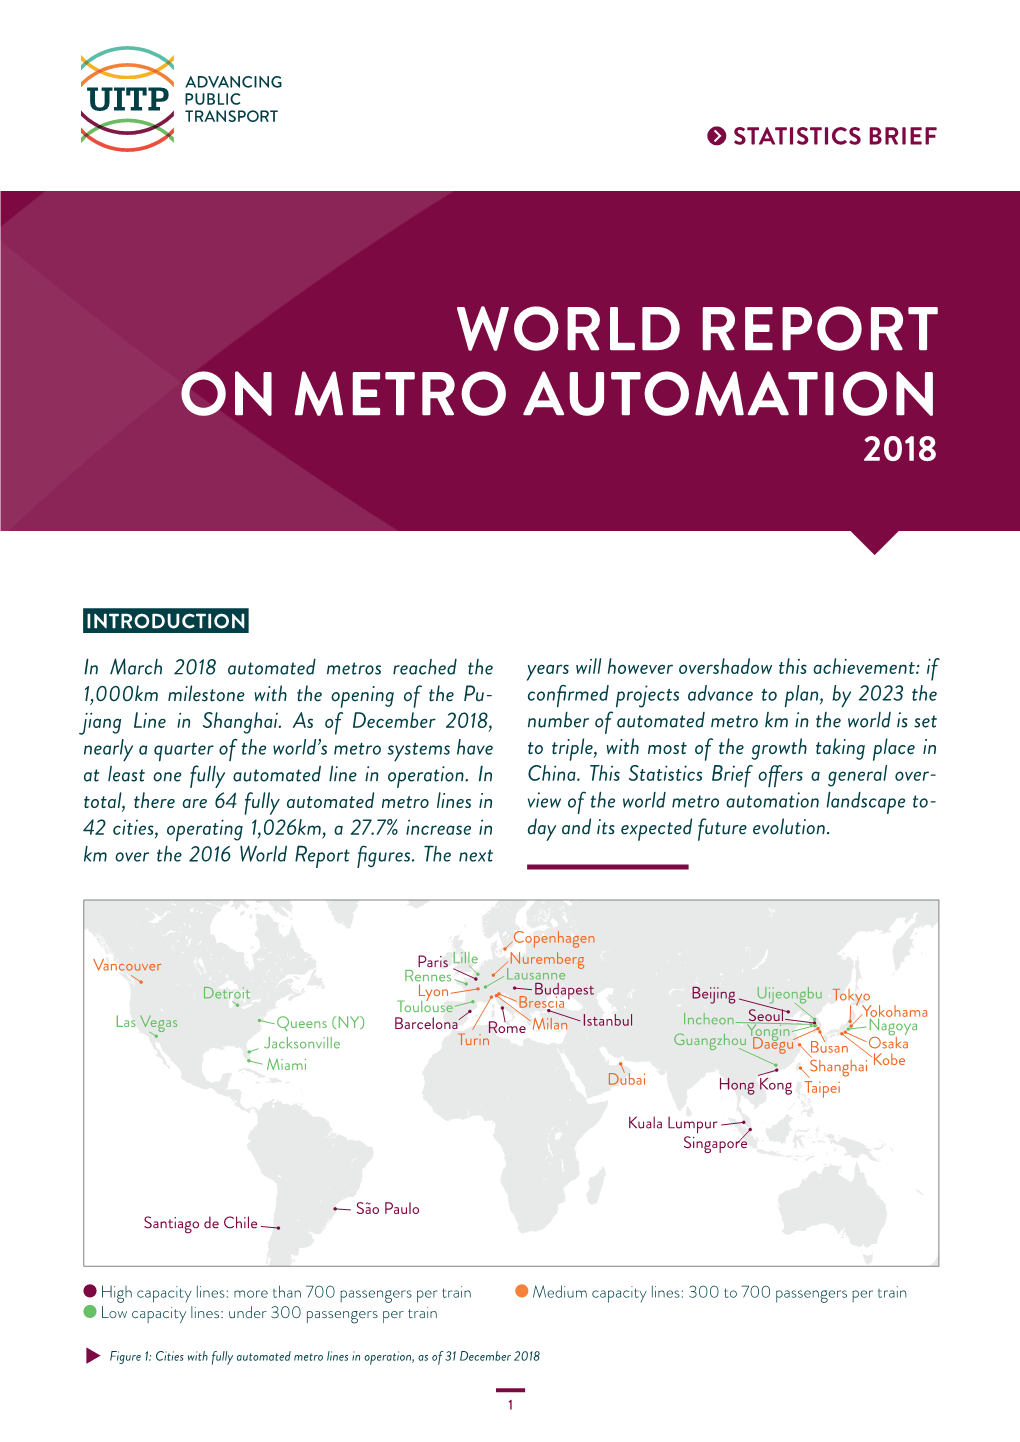 World Report on Metro Automation 2018